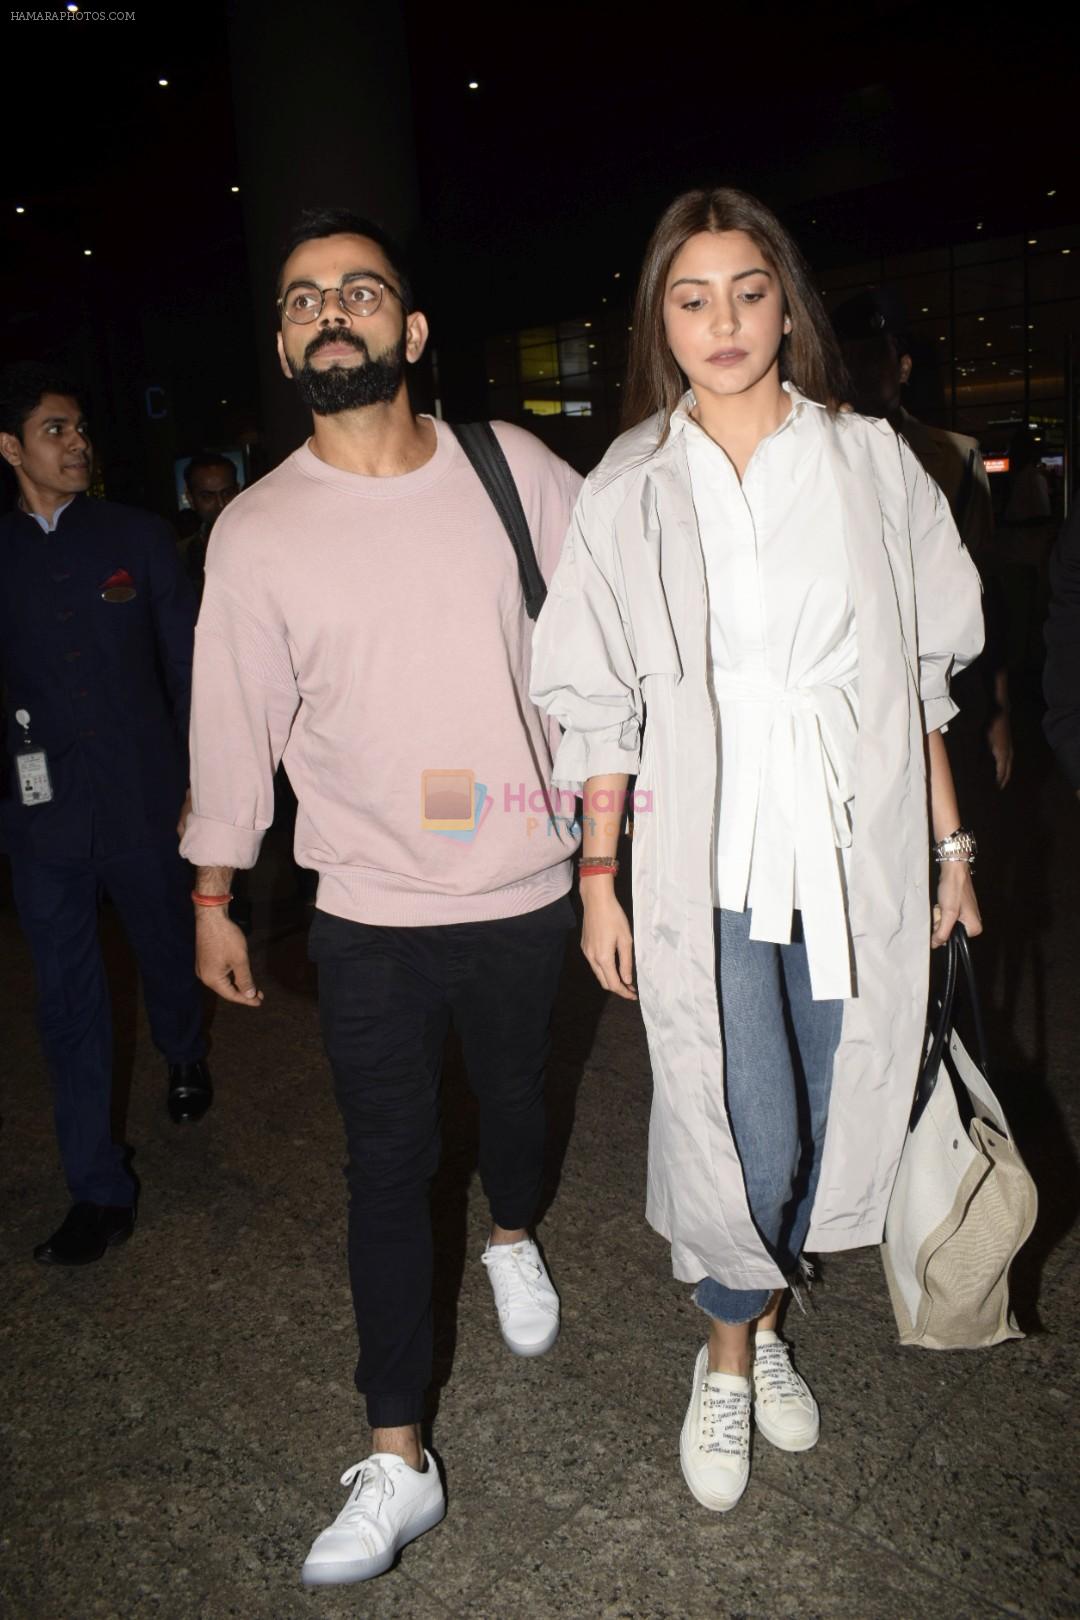 Virat Kohli, Anushka Sharma spotted at airport on 11th Nov 2018